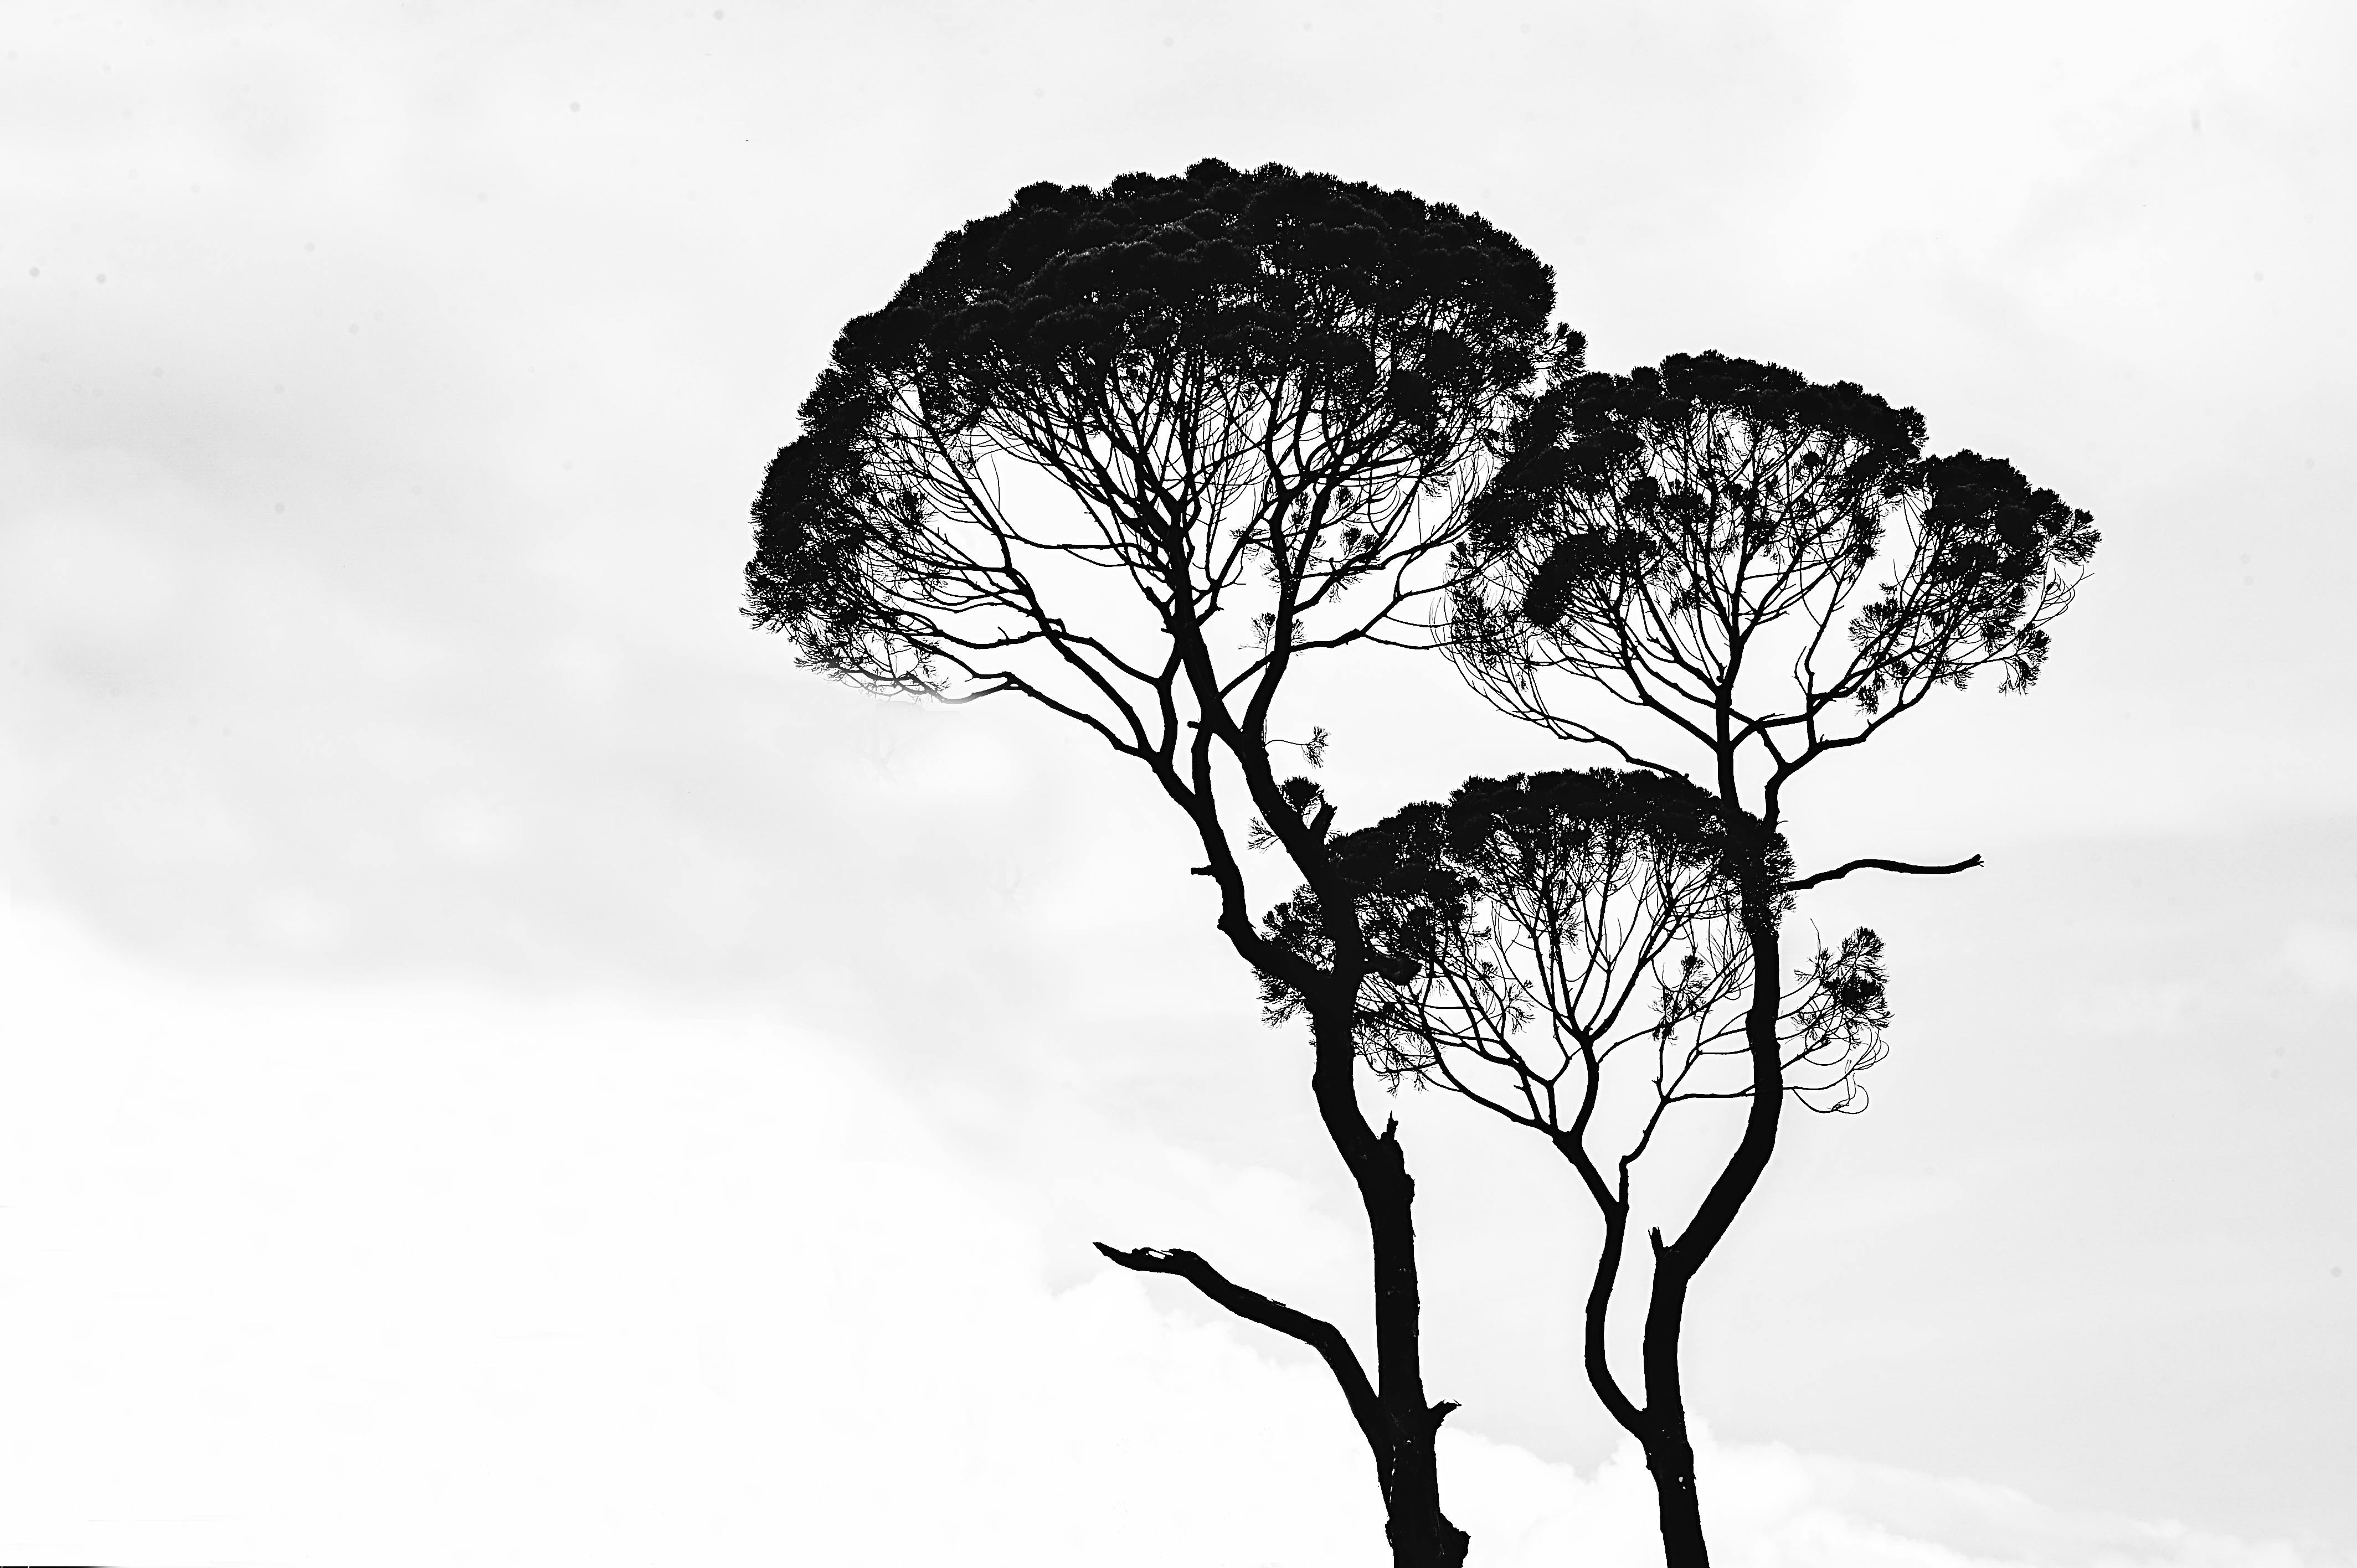 Free black and white photography · Pexels · Free Stock Photos